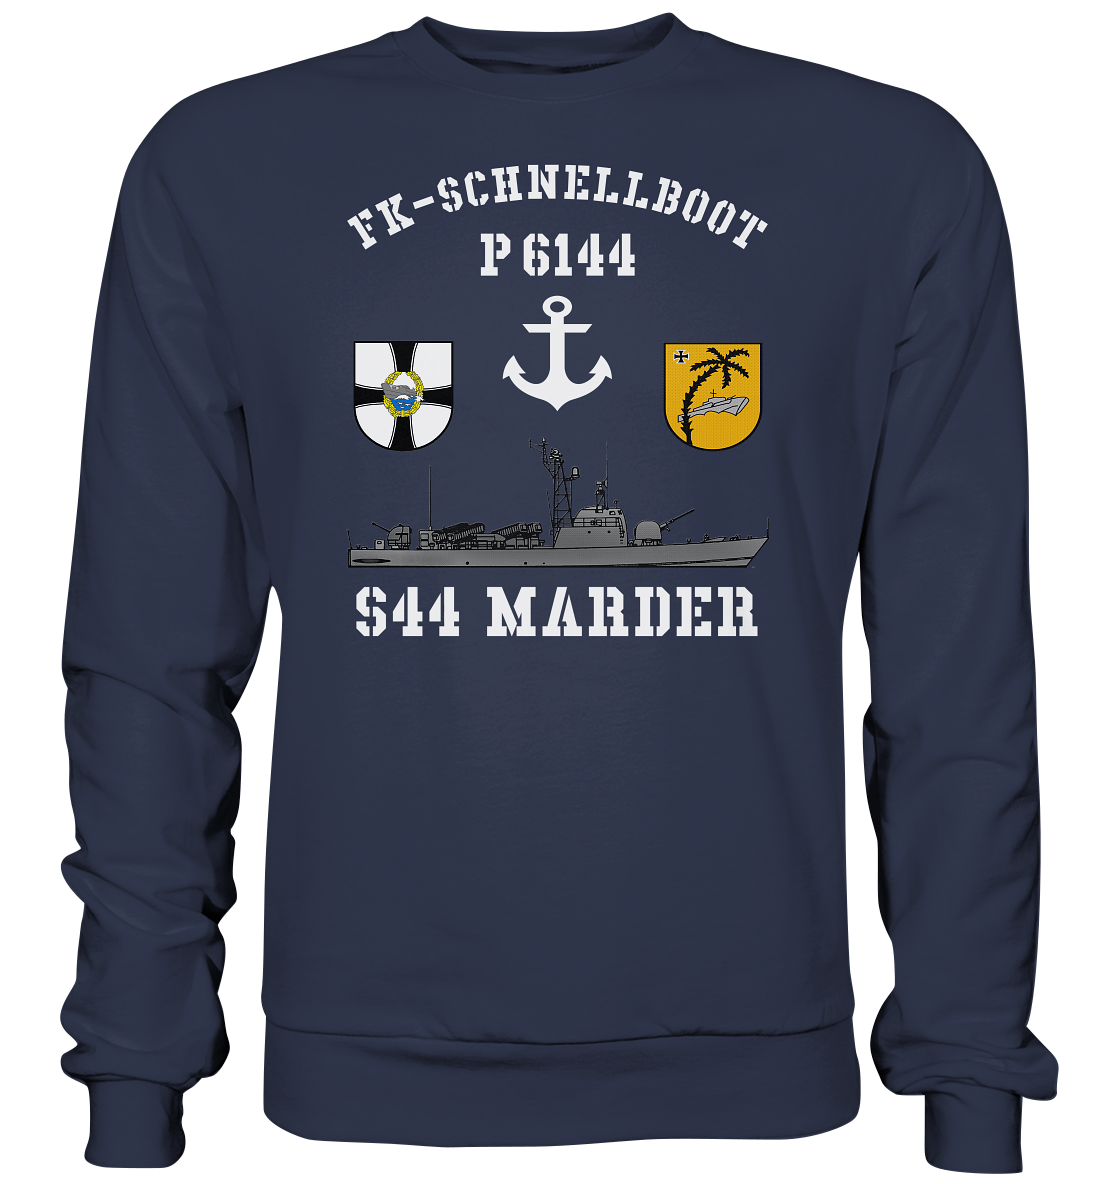 P6144 S44 MARDER - Premium Sweatshirt